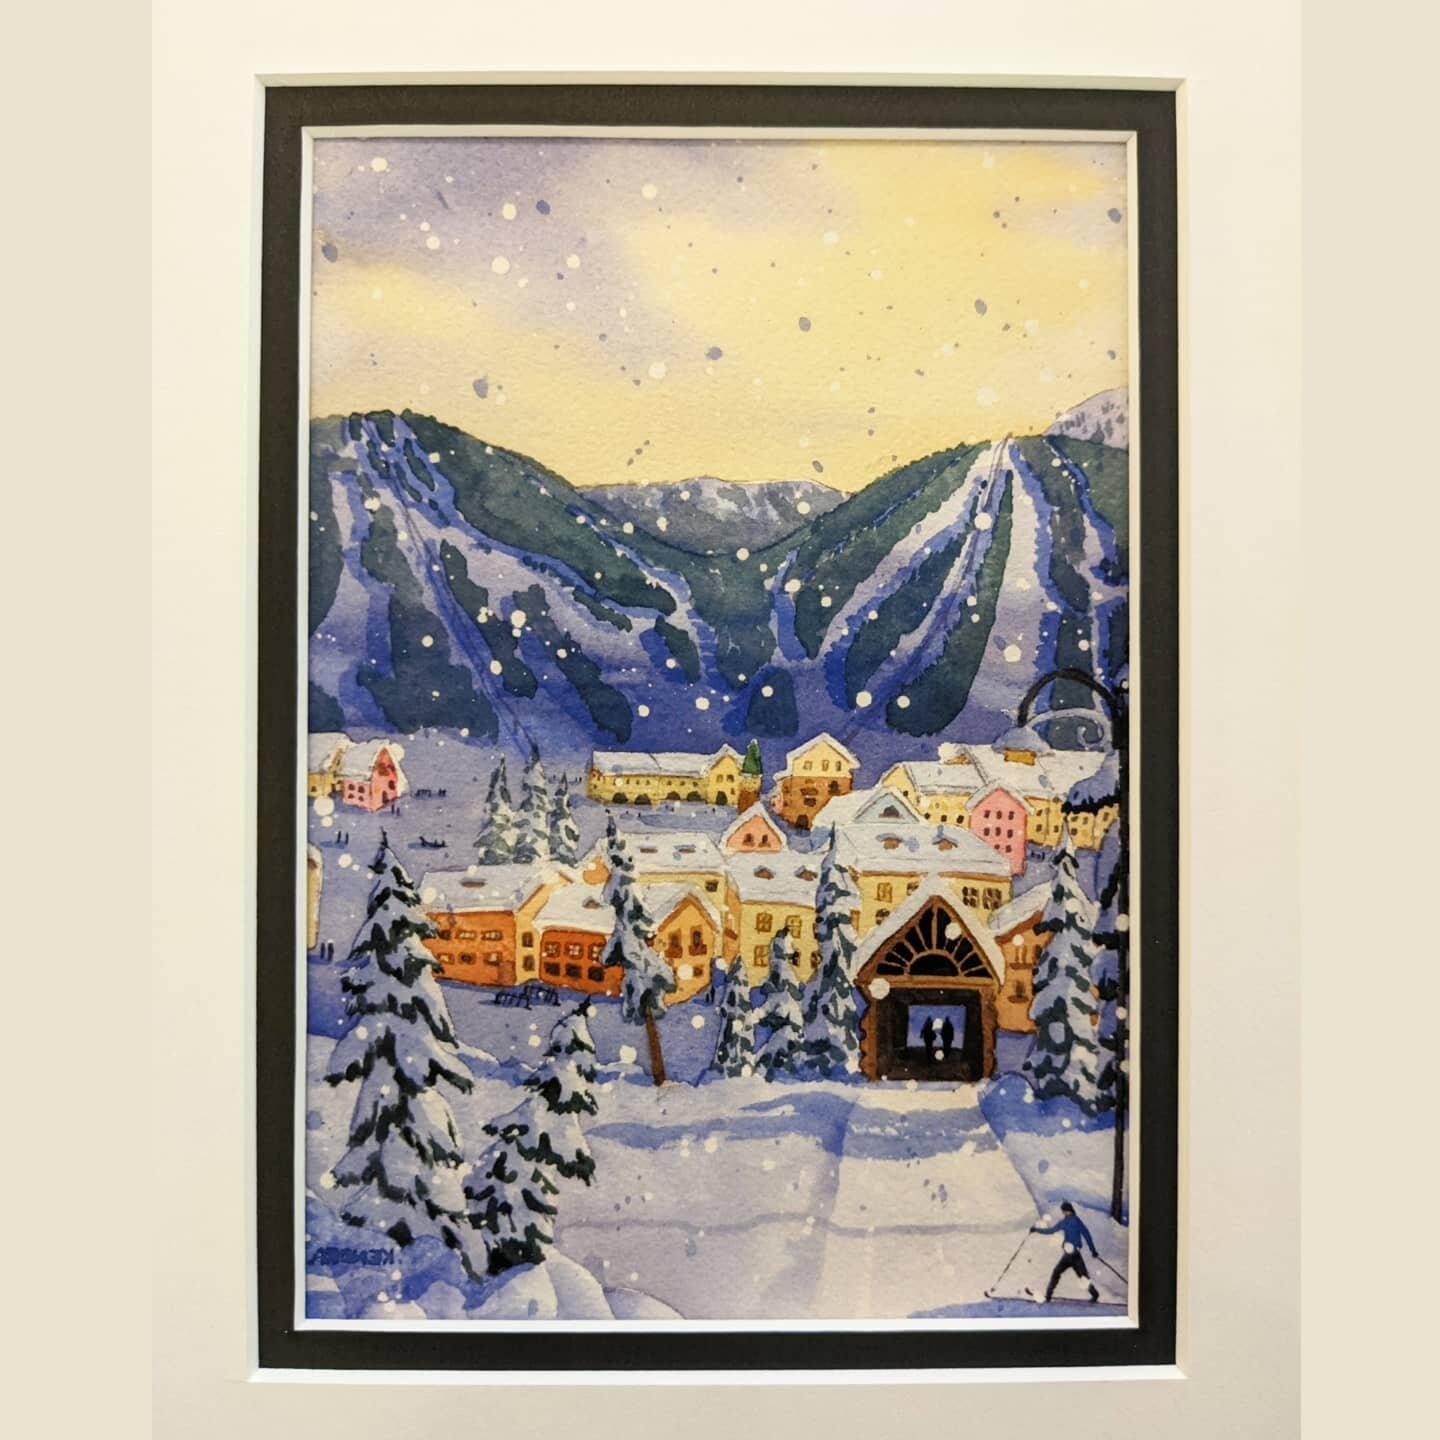 The seasons not over yet! Who else is loving all this fresh snow!
.
.
Kendra Print 8x10 - $24.95
#ski #skiseason #watercolor #village #canadianartist #britishcolumbia #localartist #art #shoplocal #sunpeaks #sunpeaksresort #canada